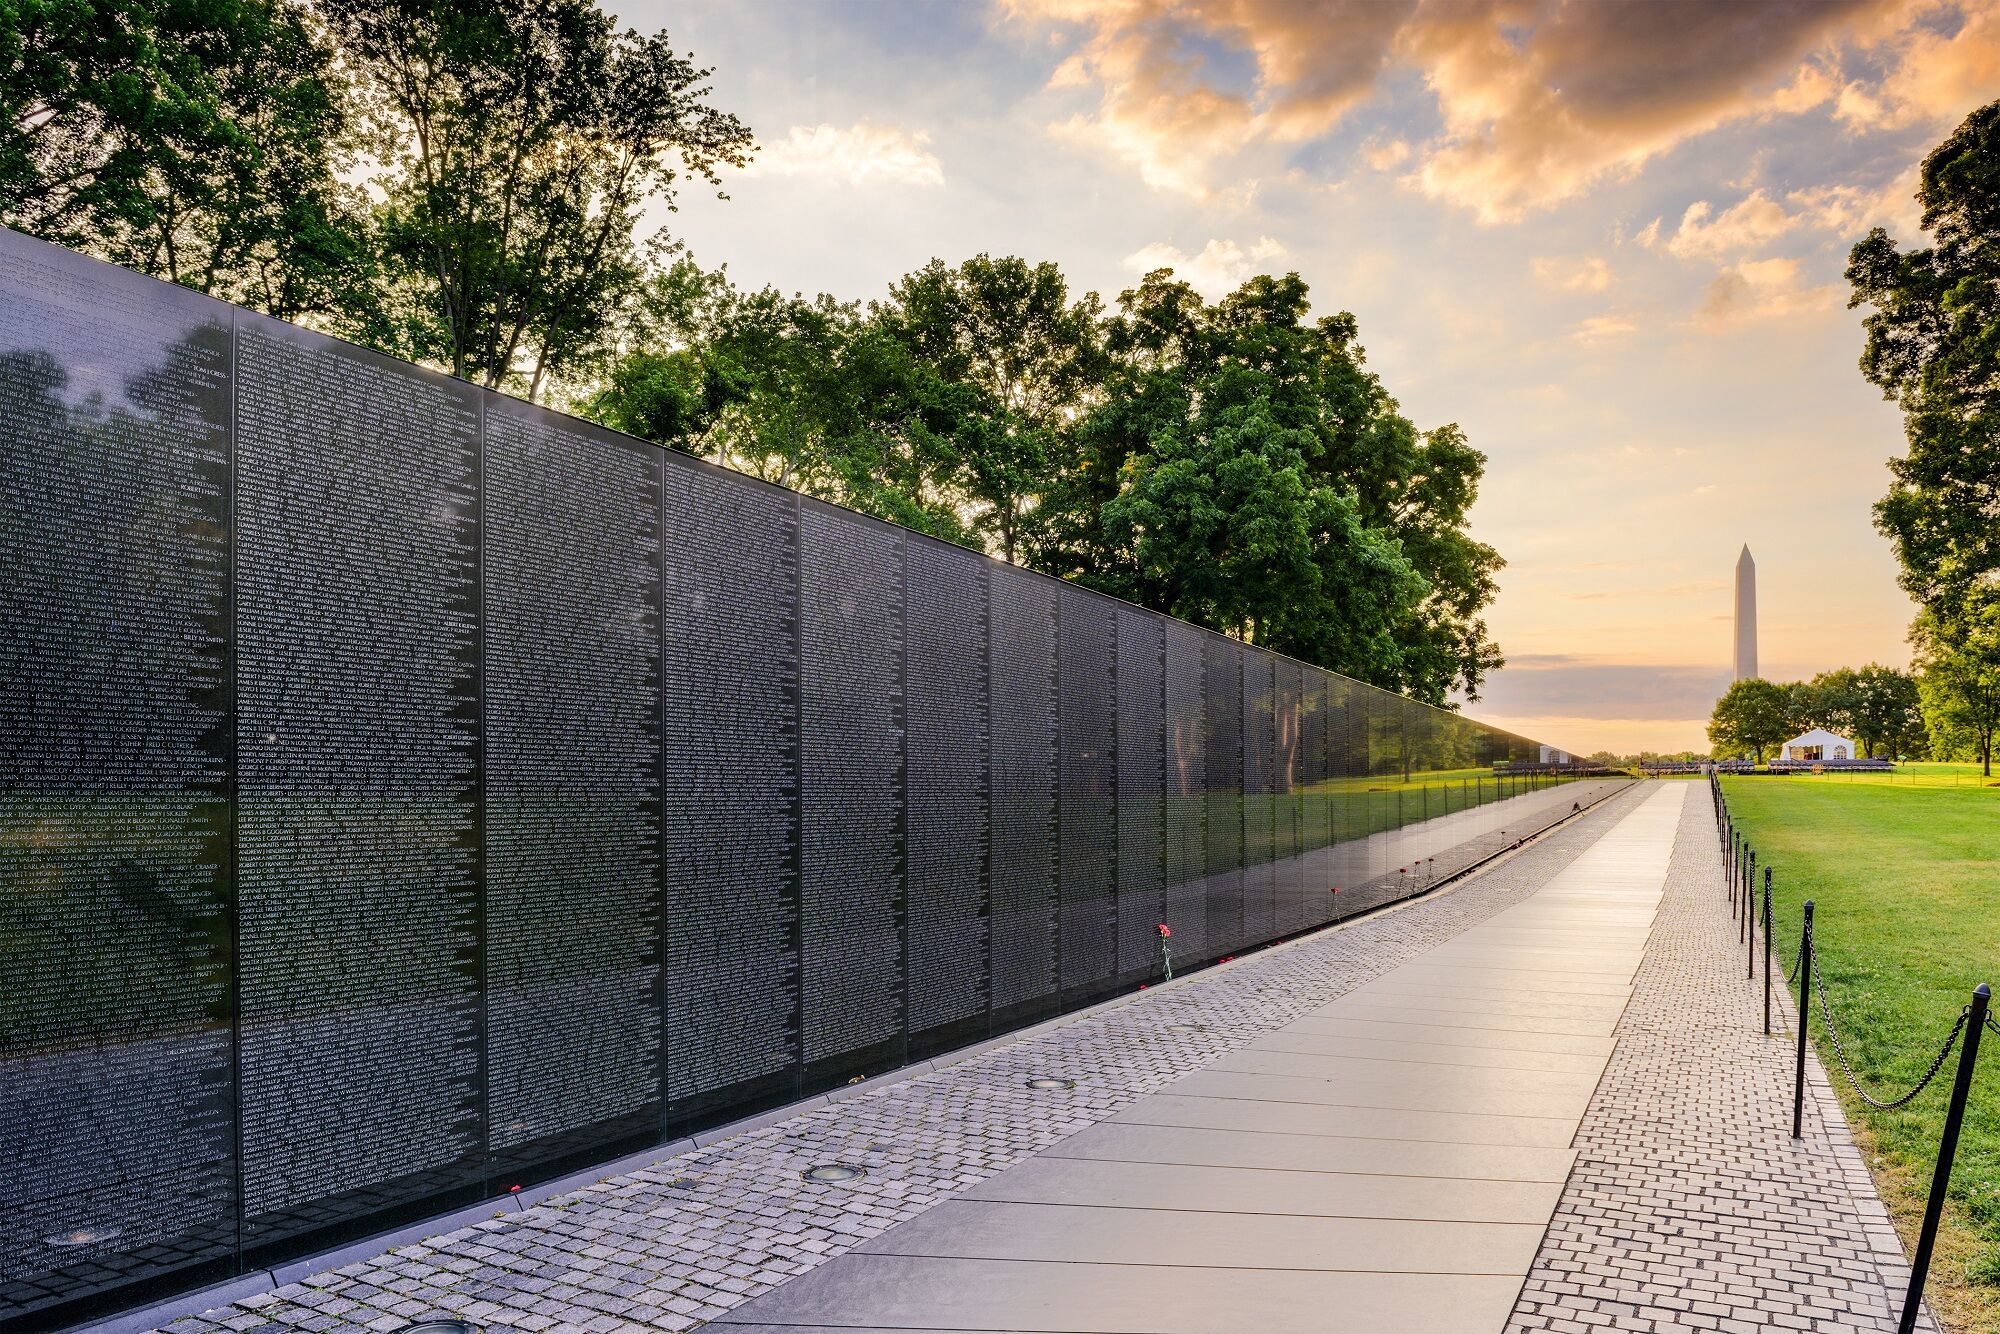 <p>Vietnam Veterans Memorial</p>